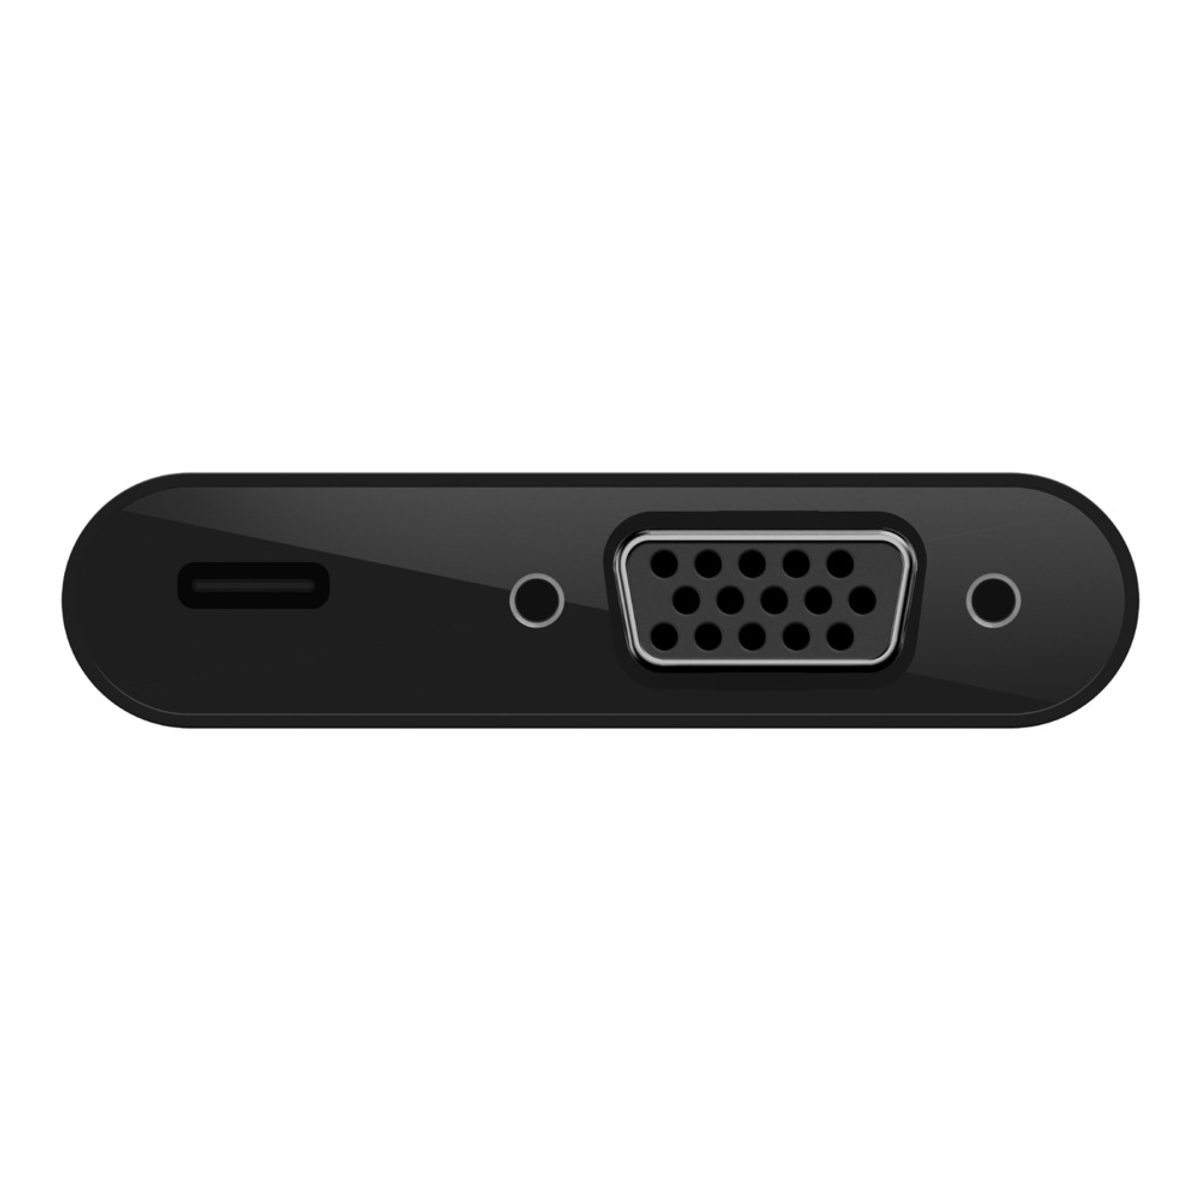 m USB-C BELKIN 0,06 USB-C / Adapter, Adapter, VGA Video +